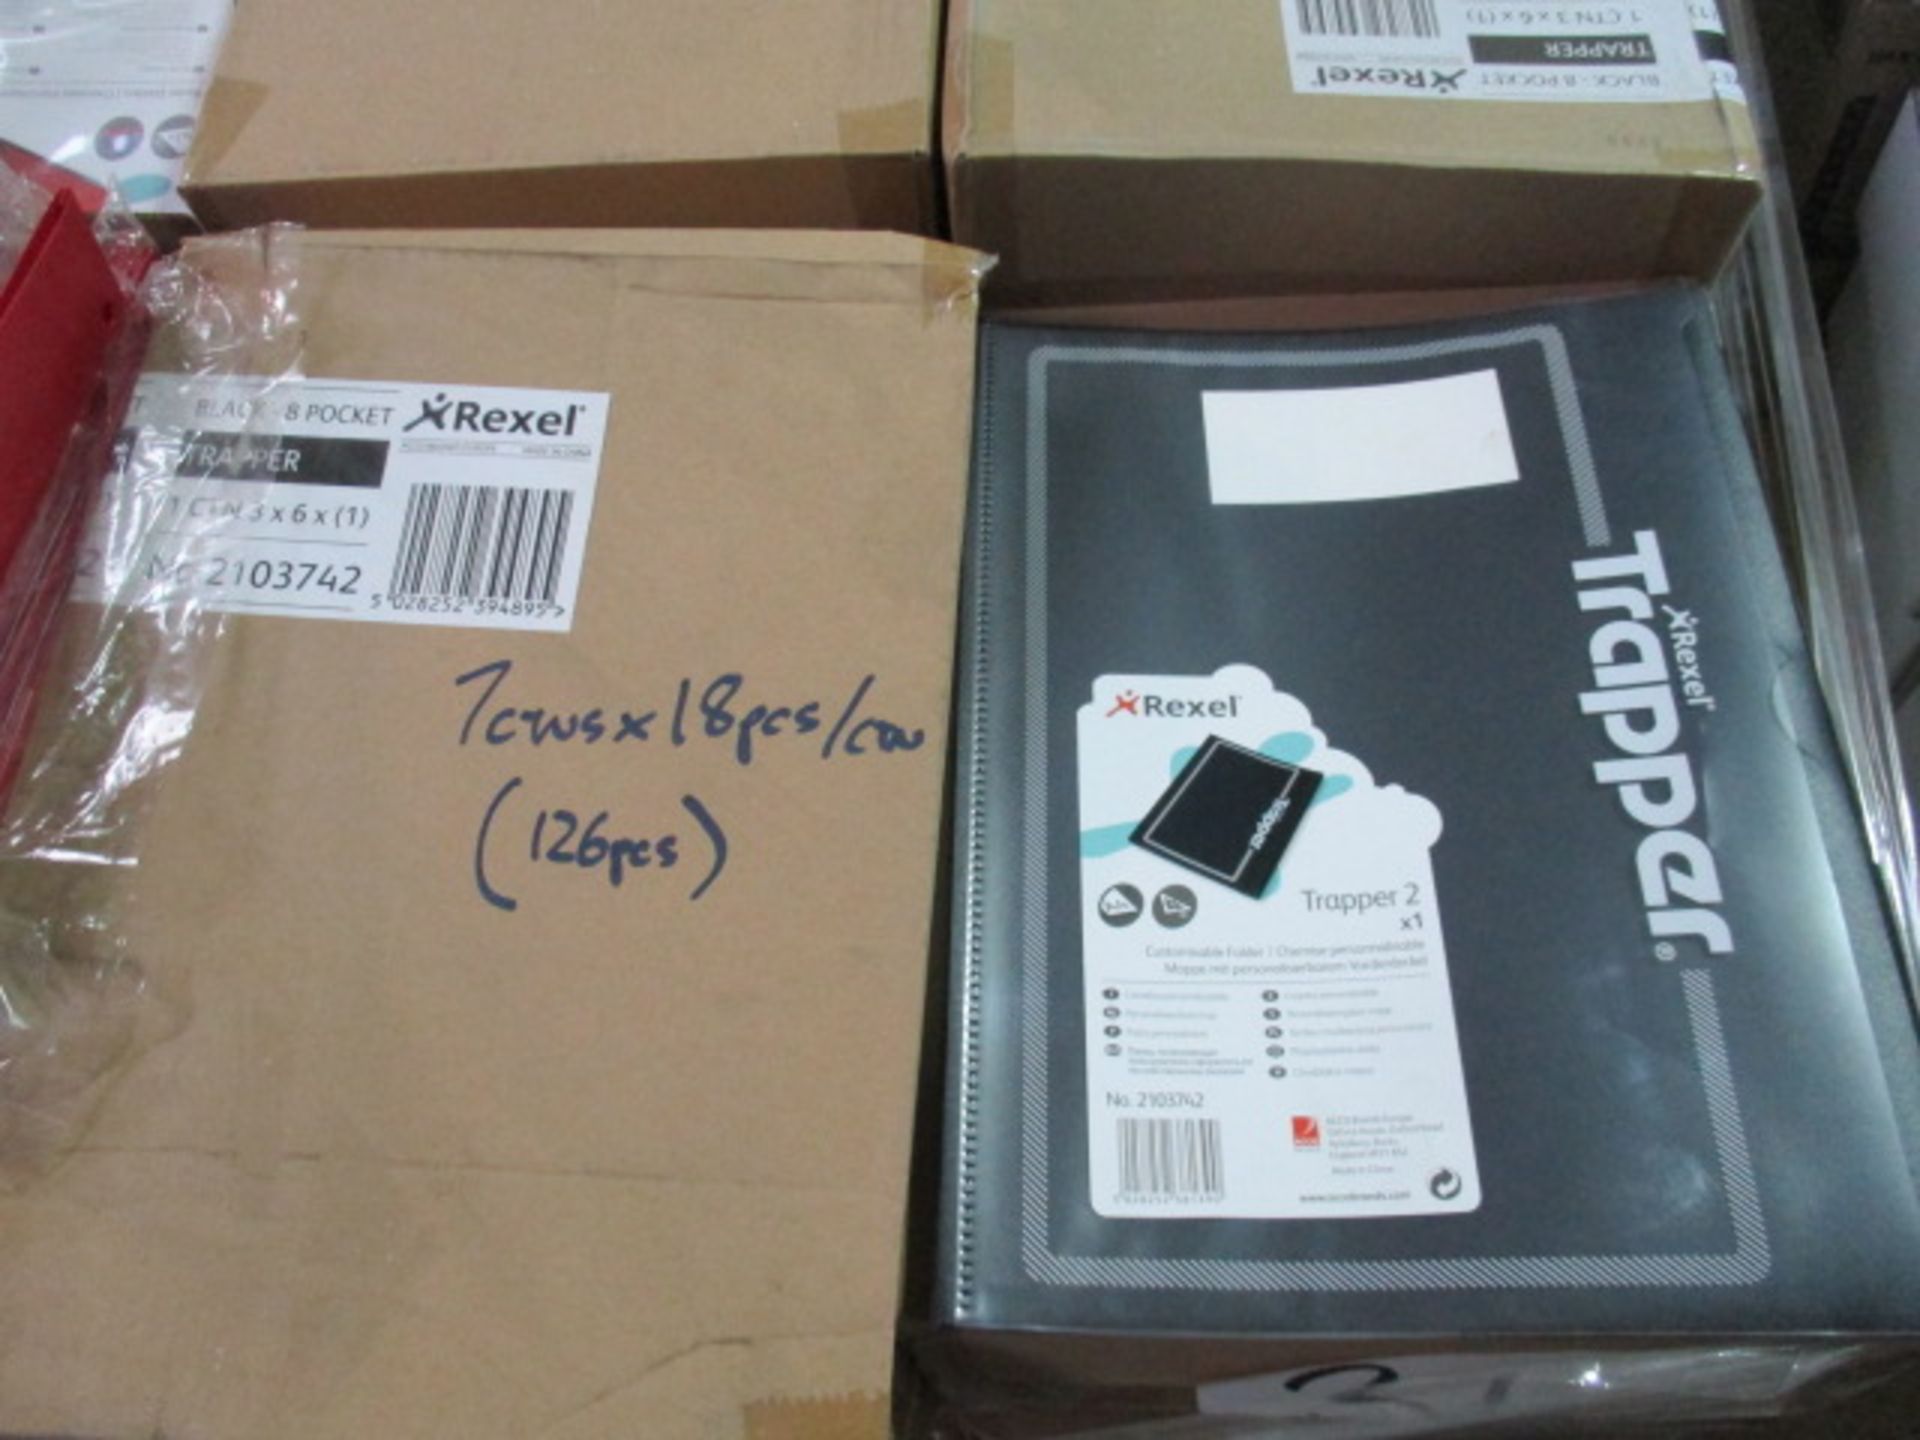 126 pcs Rexel Brand new Sealed Trapper folder system